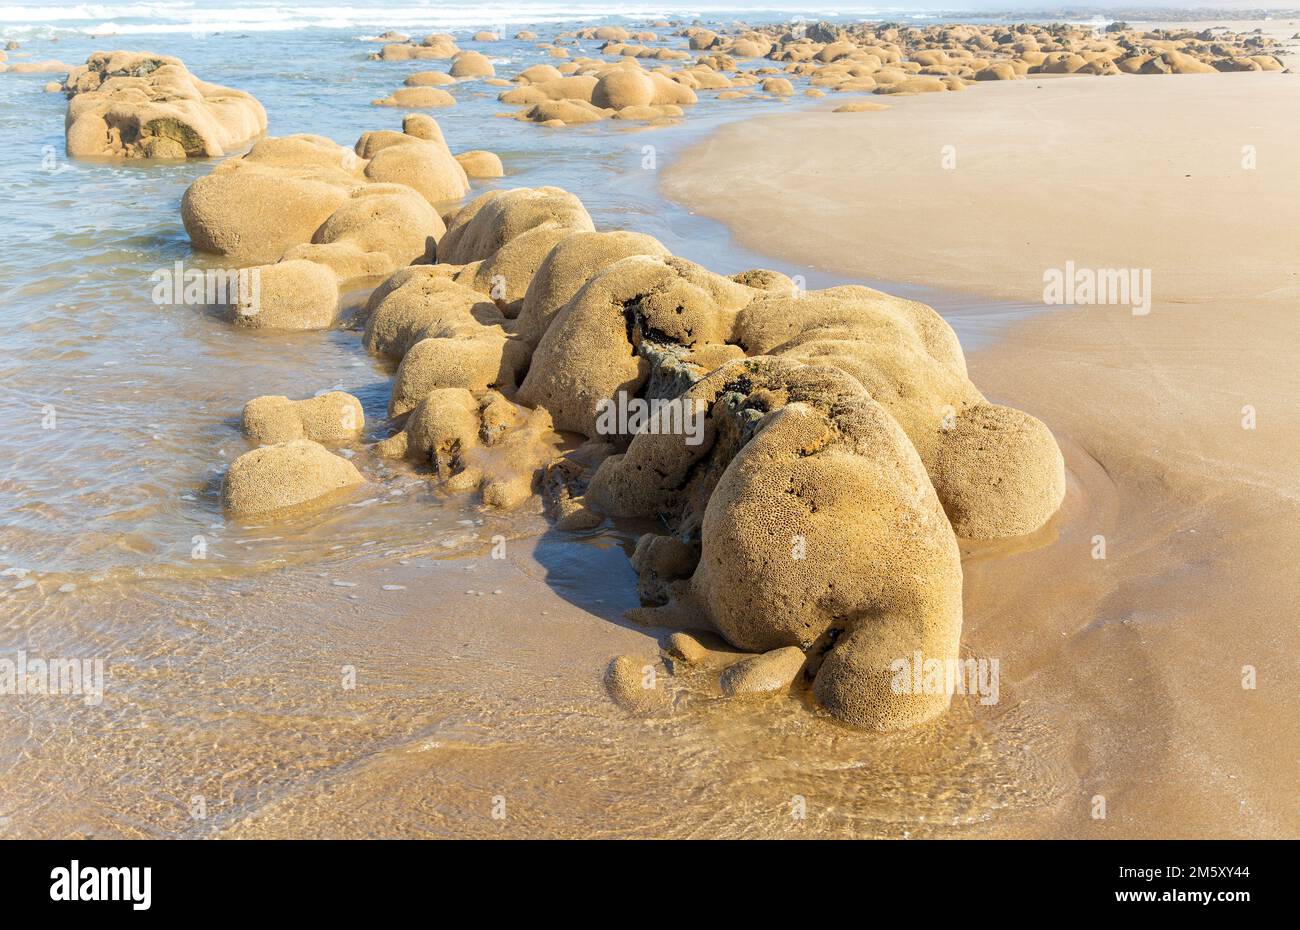 Sabellaria alveolata honeycomb worm reef, Mimid beach, Sidi Boufdail, Mirleft, Morocco, north Africa Stock Photo